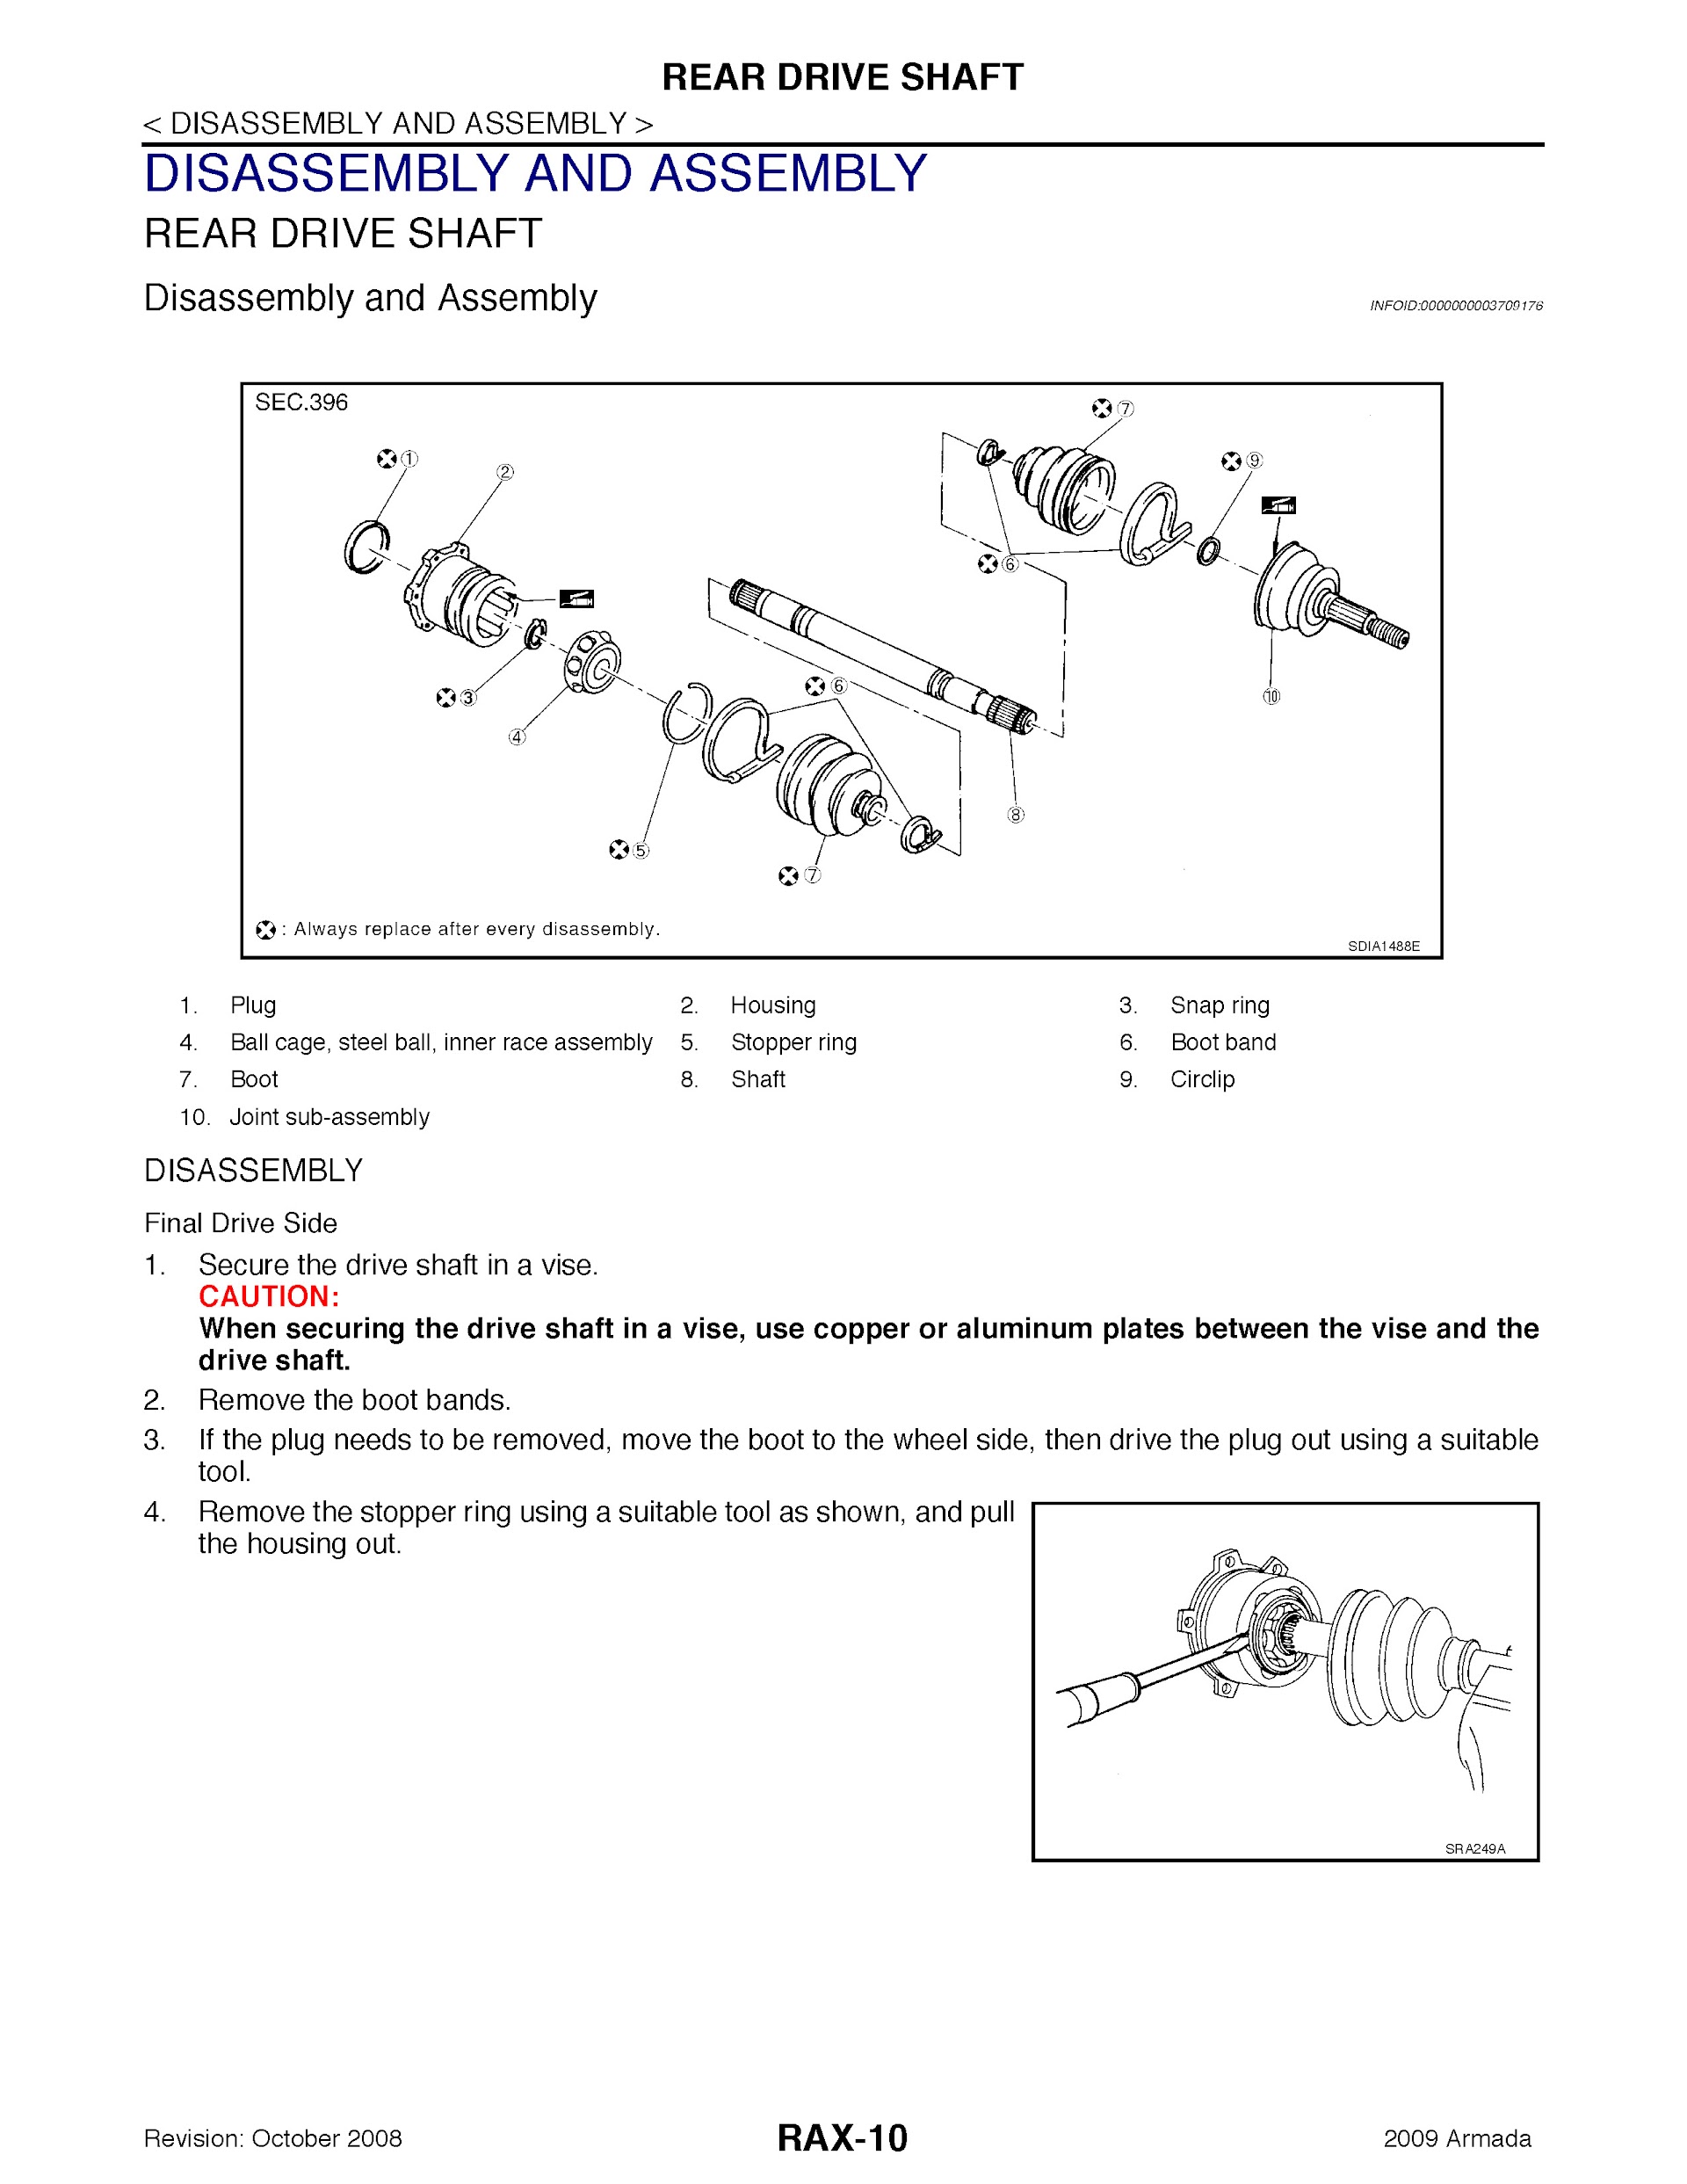 2009 Nissan Armada Repair Manual, Rear Drive Shaft Removal and Installation